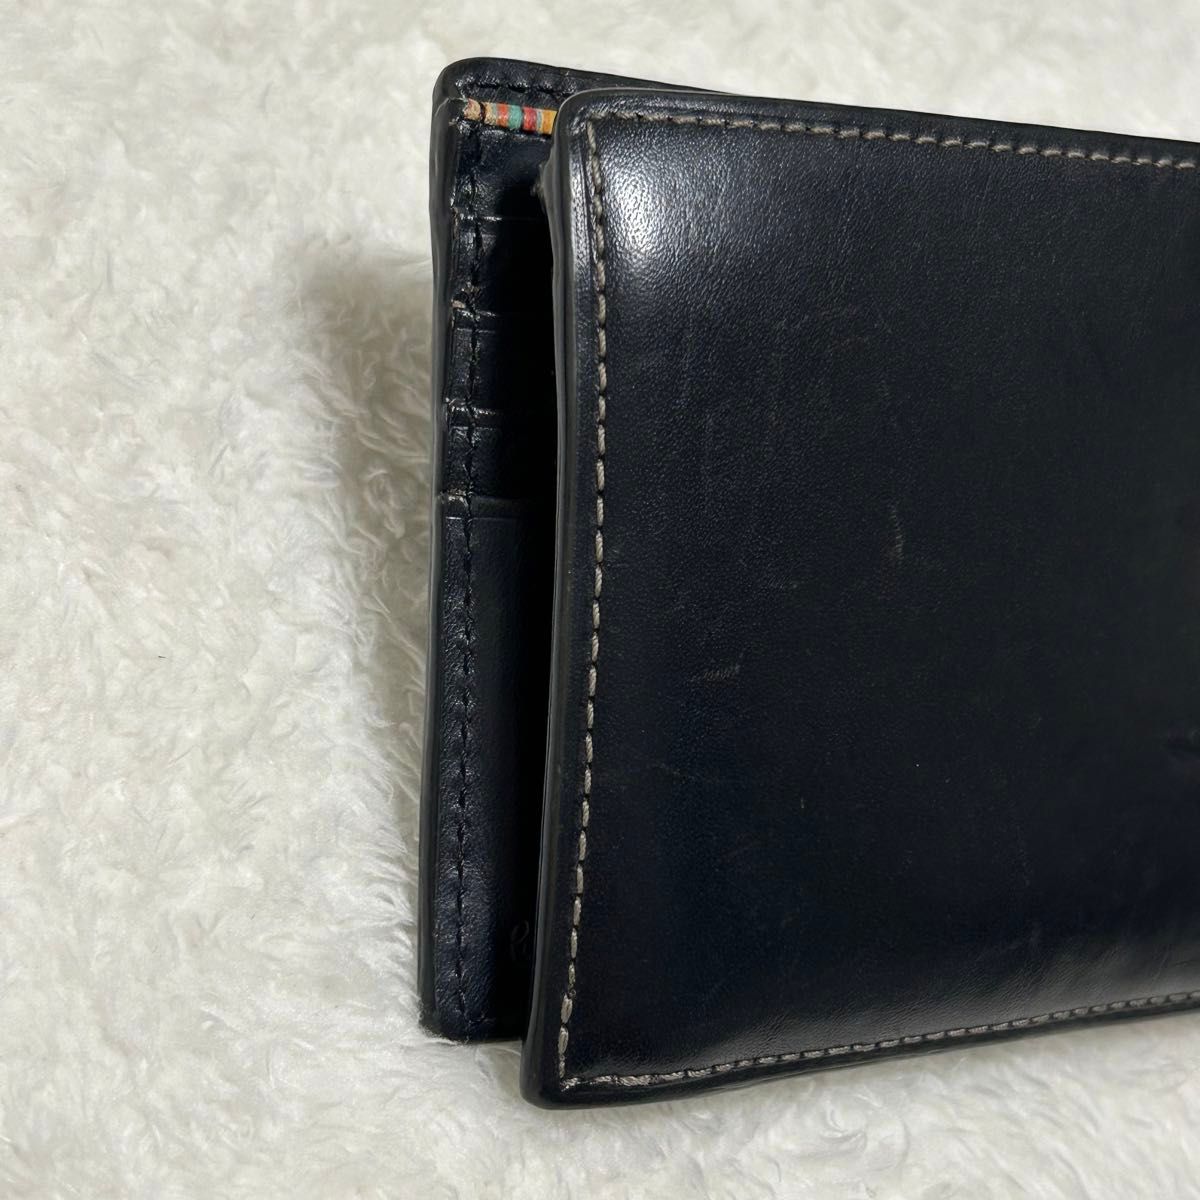 Paul Smith ポールスミス マルチストライプ レザー 本革 二つ折り財布 財布 コンパクトウォレット